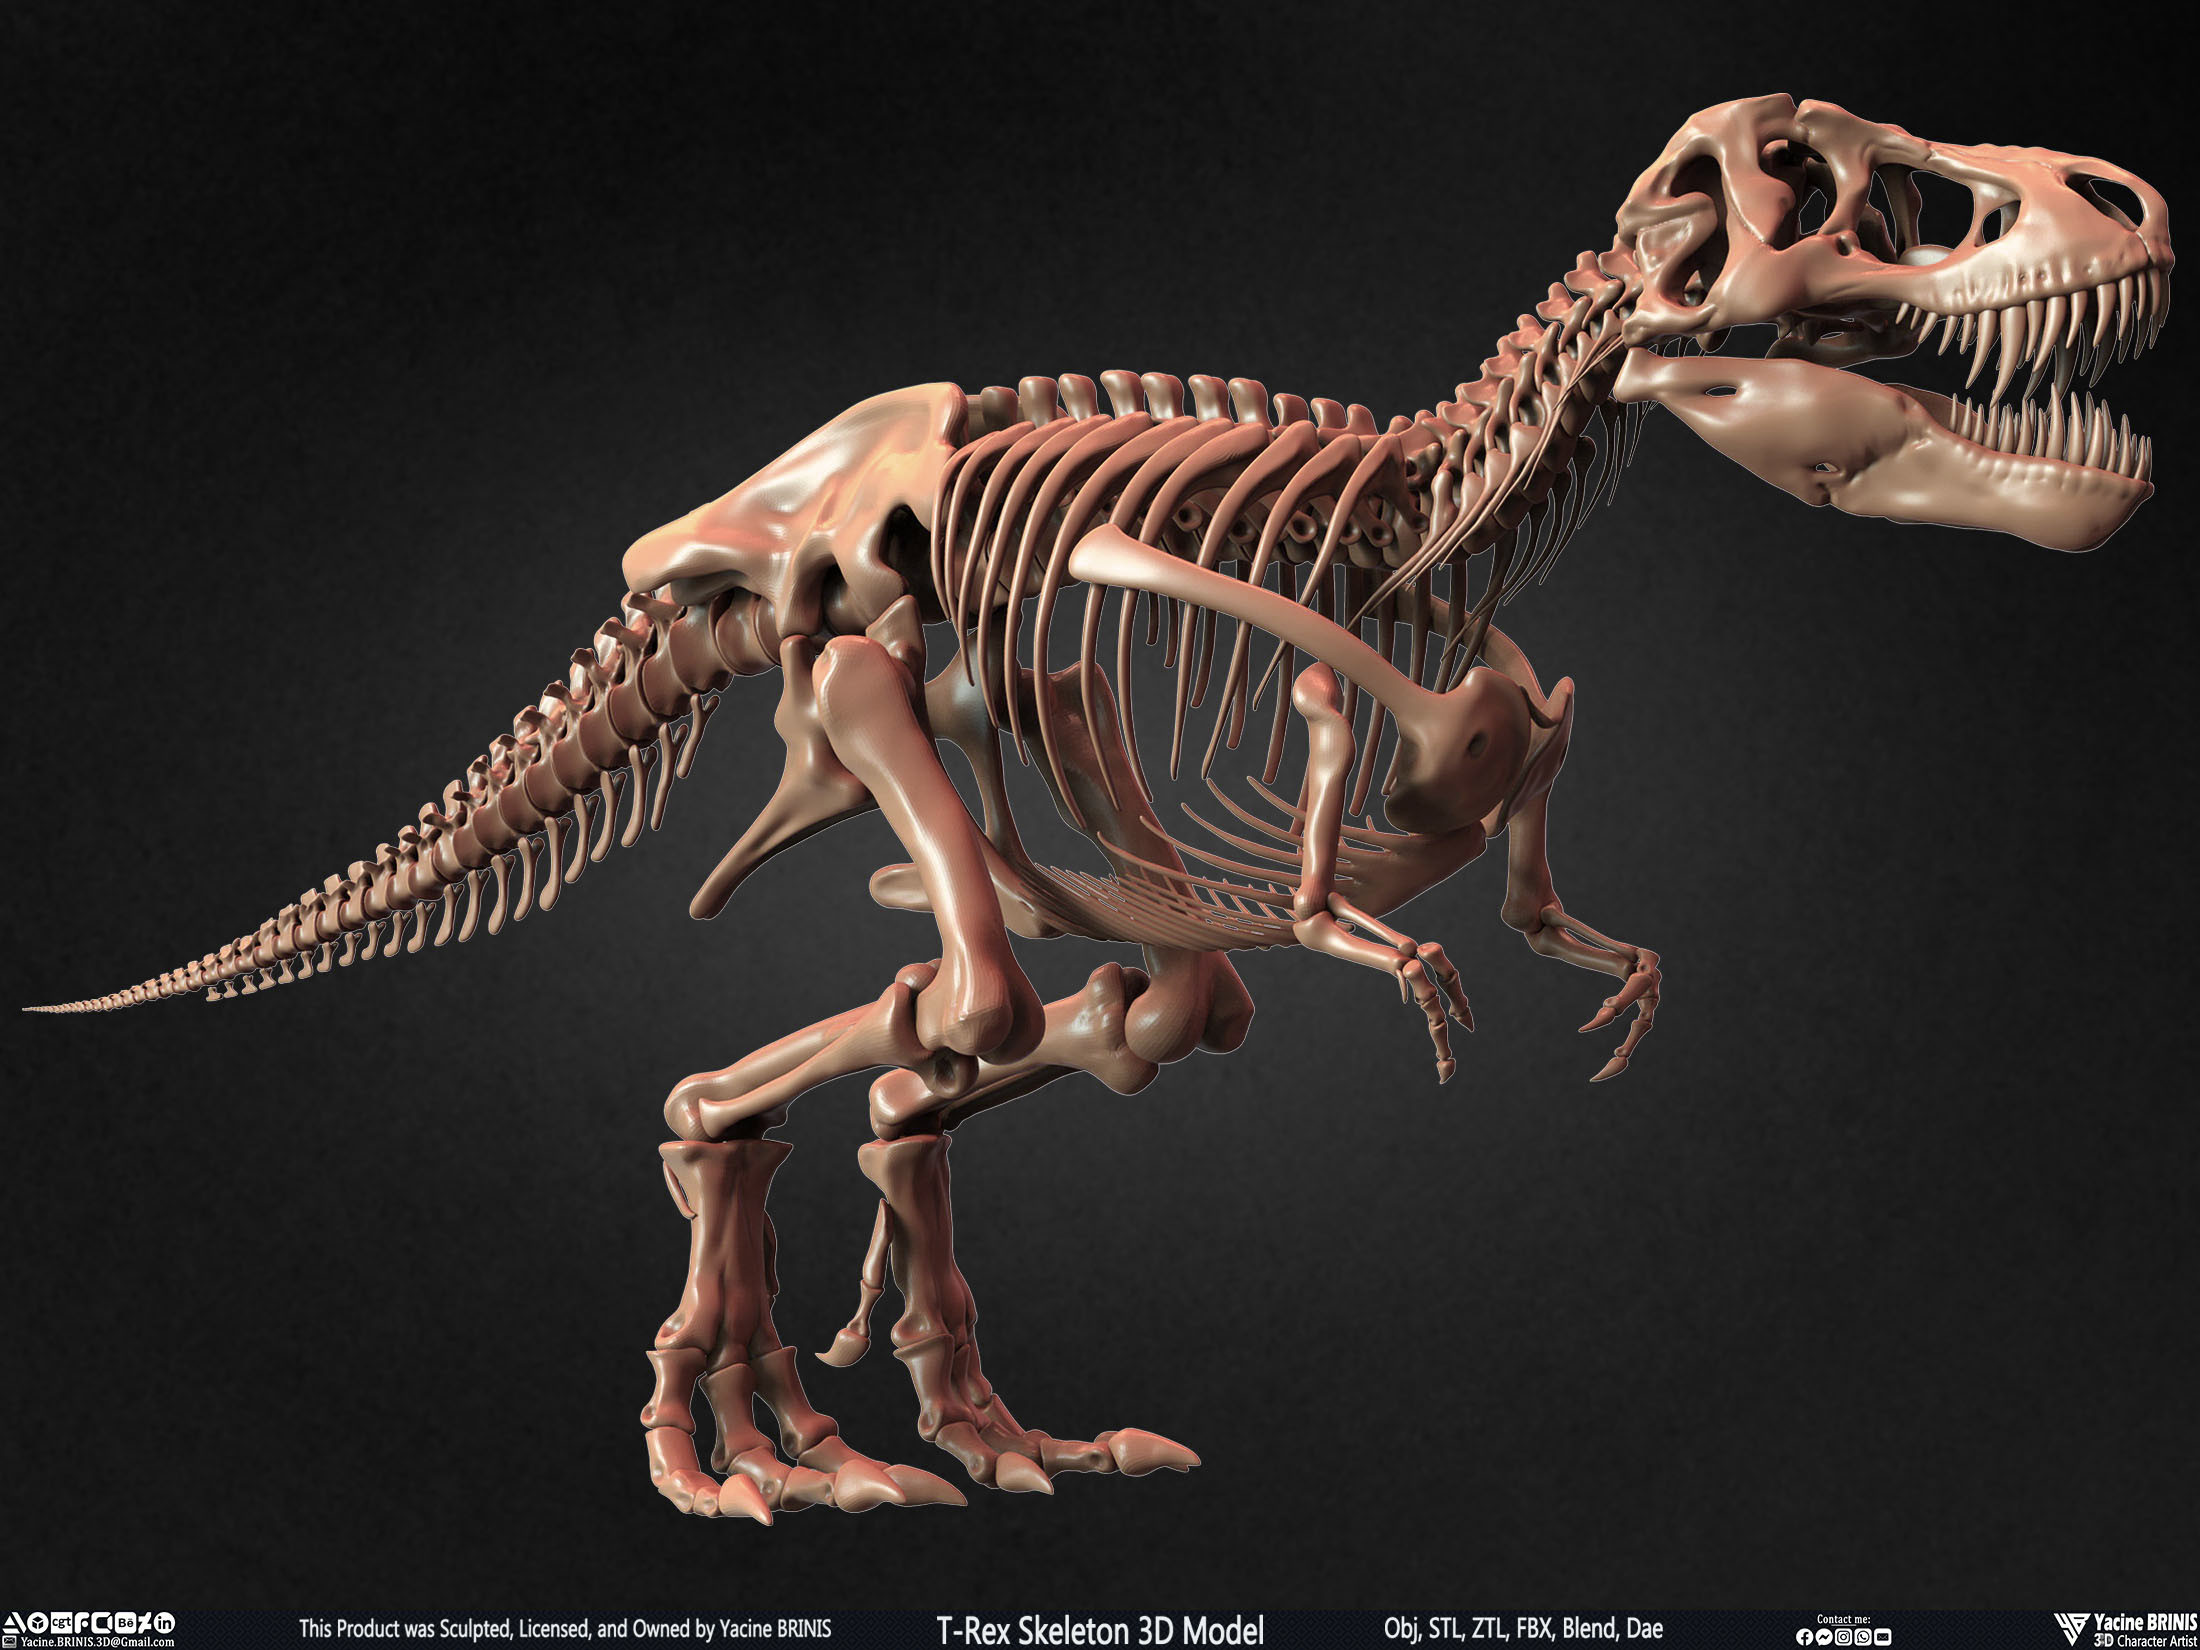 T-Rex Skeleton 3D Model (Tyrannosaurus Rex) Sculpted By Yacine BRINIS Set 005